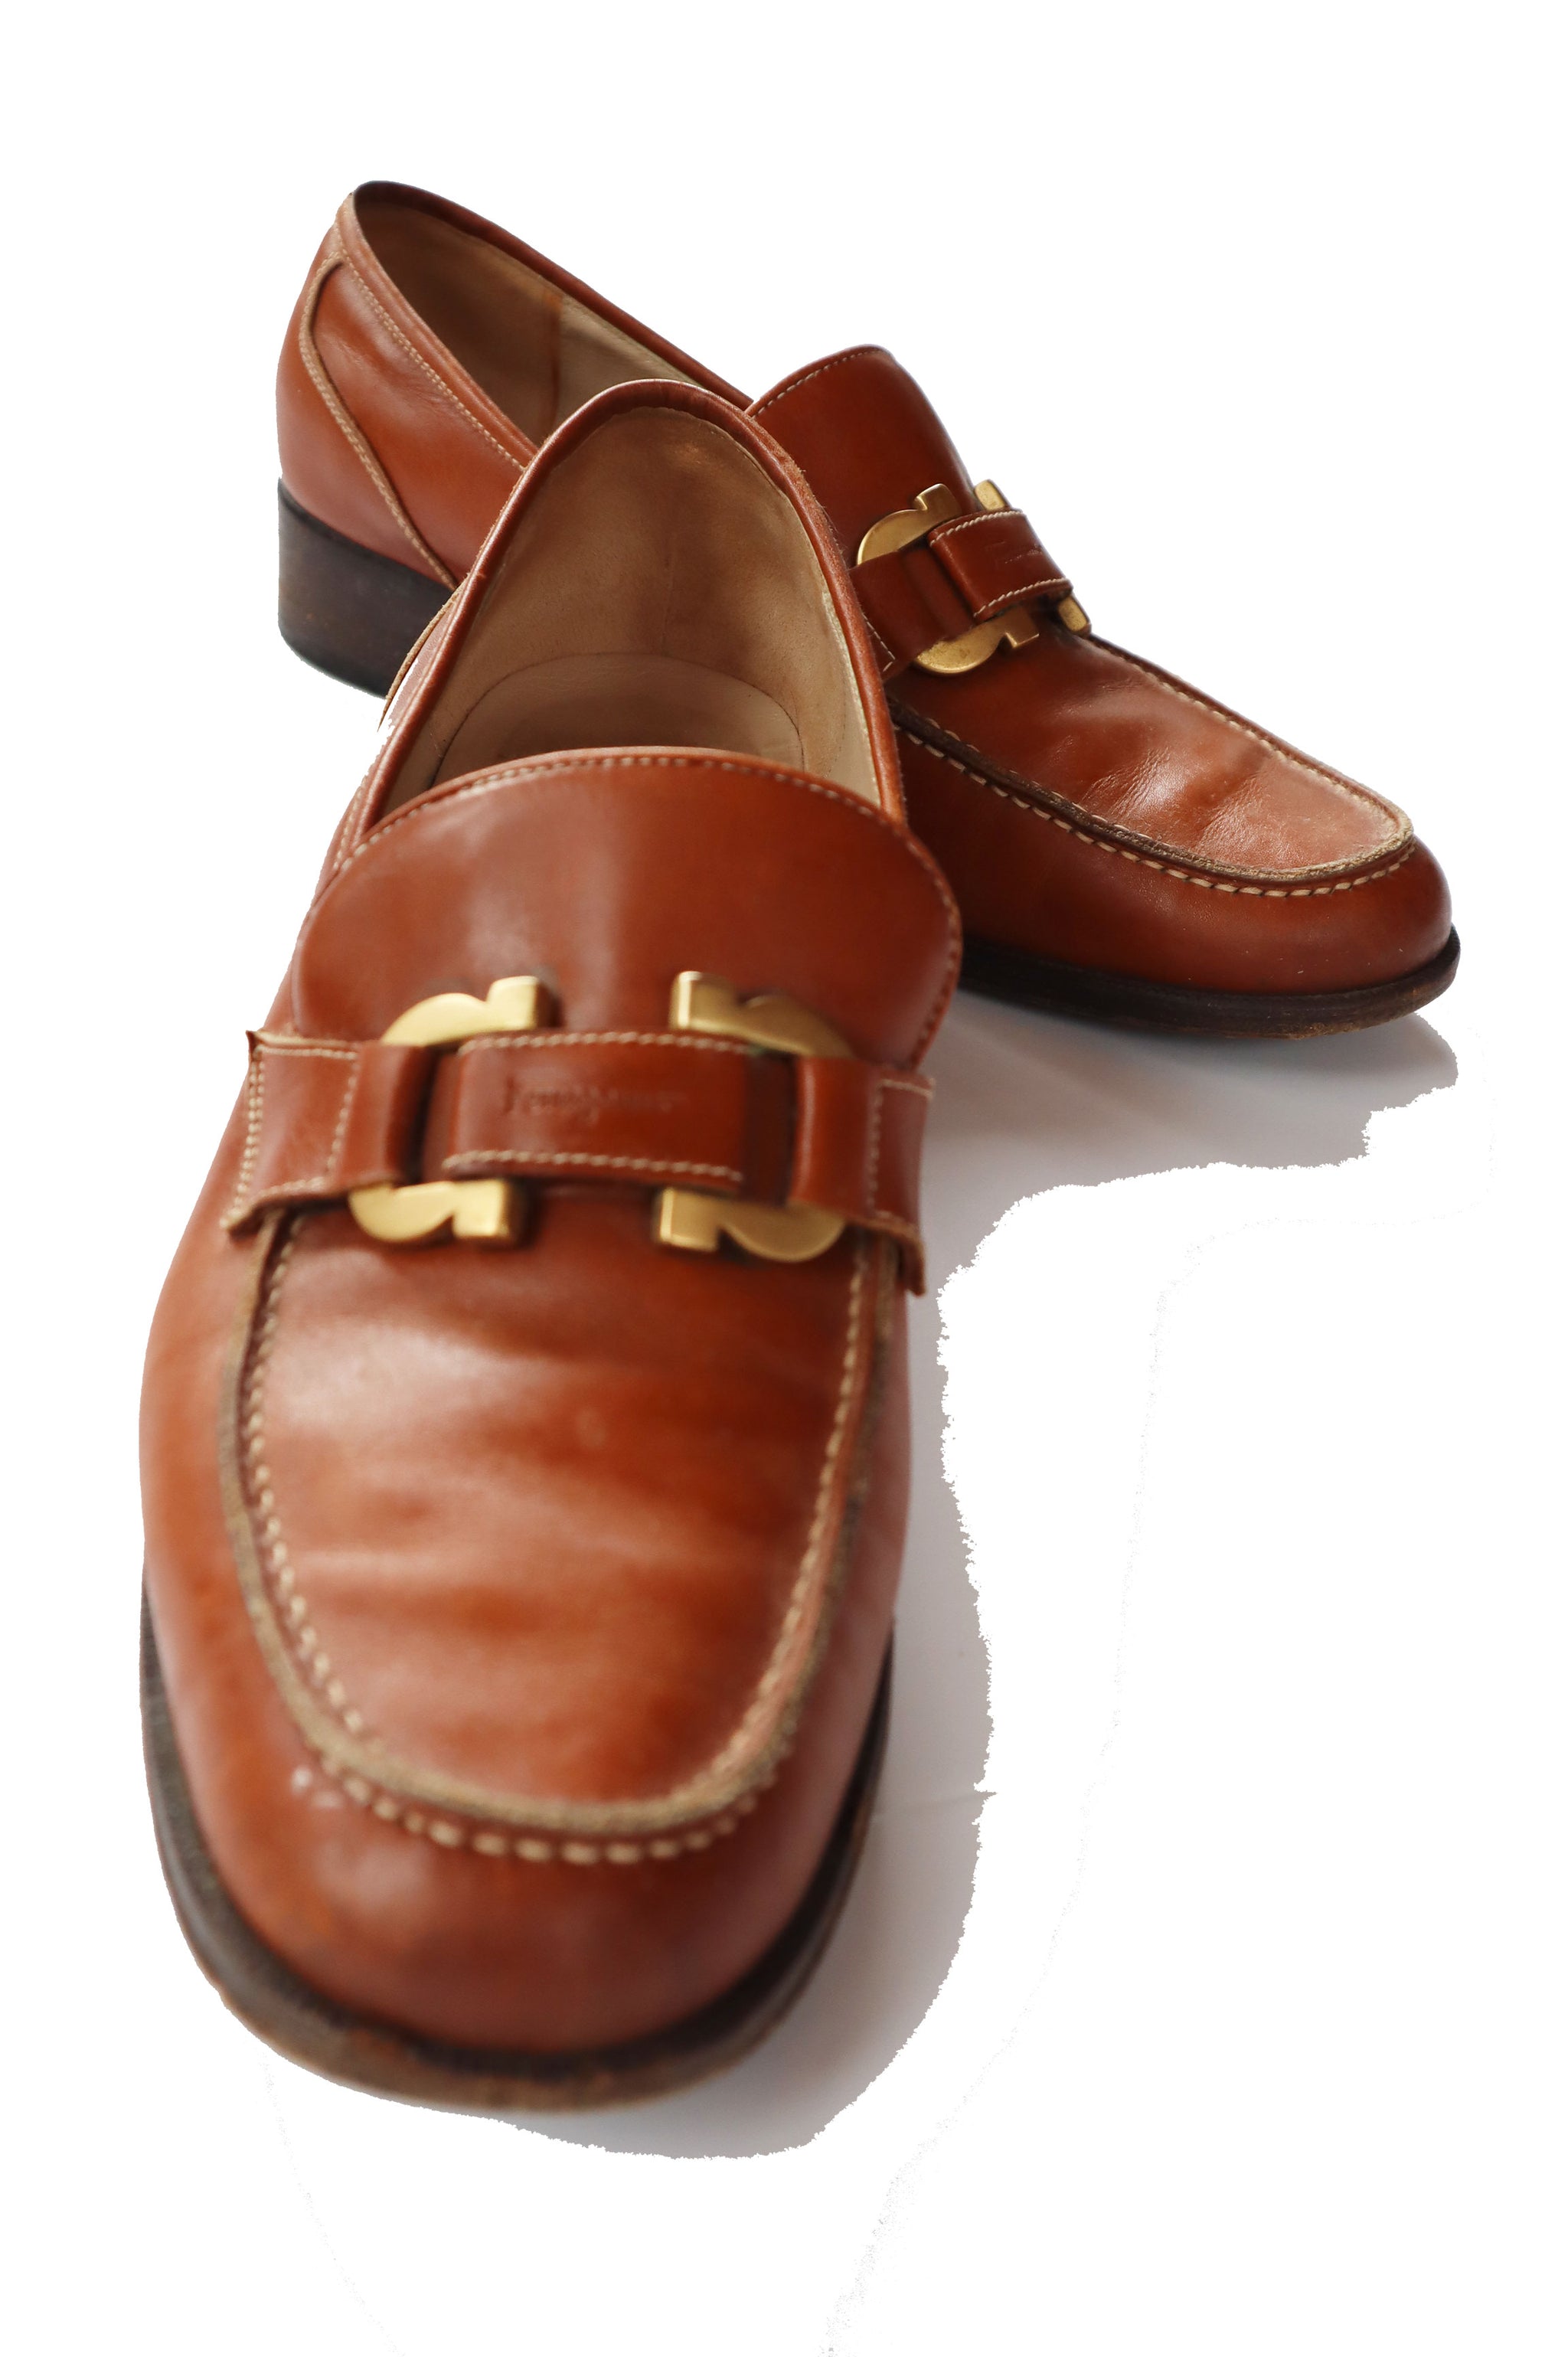 Salvatore Ferragamo Boutique Black Square Heel Loafer Style Shoes